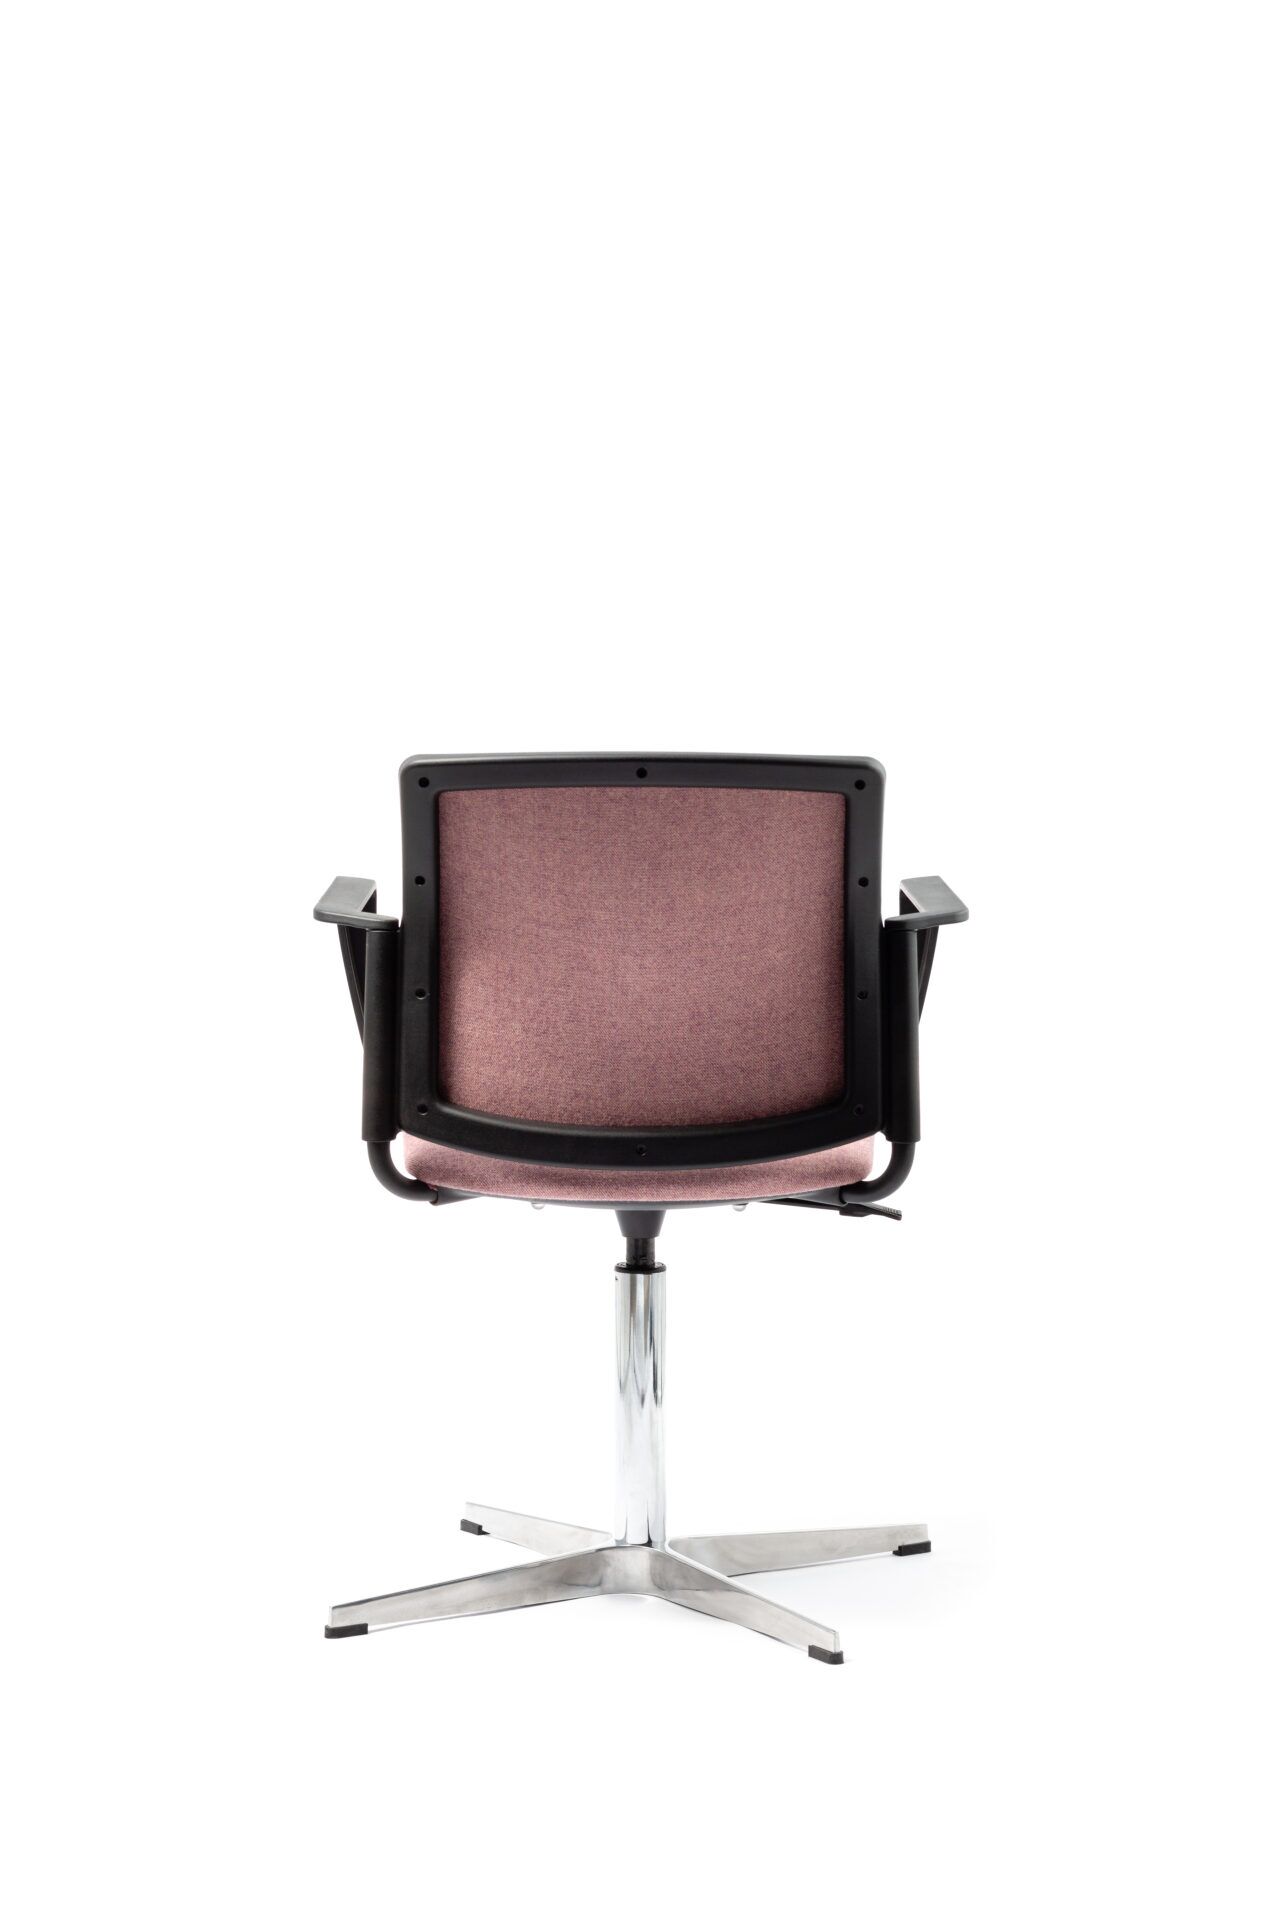 Backside light pink office chair 4job BGroup